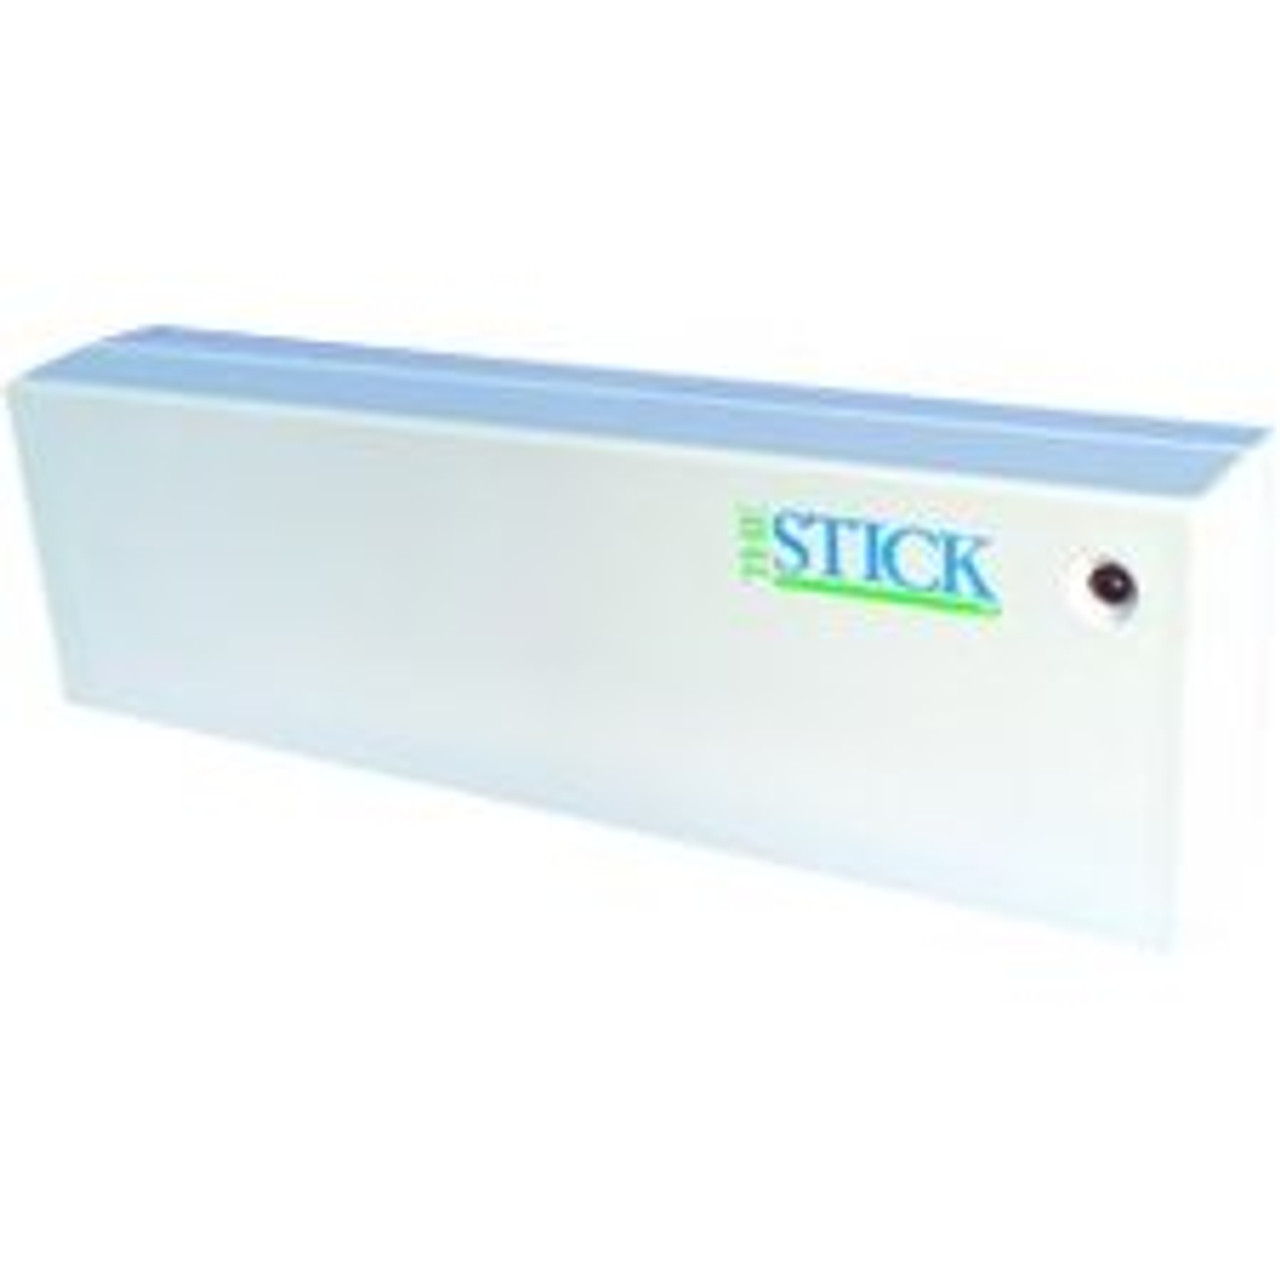 The Stick STK29112